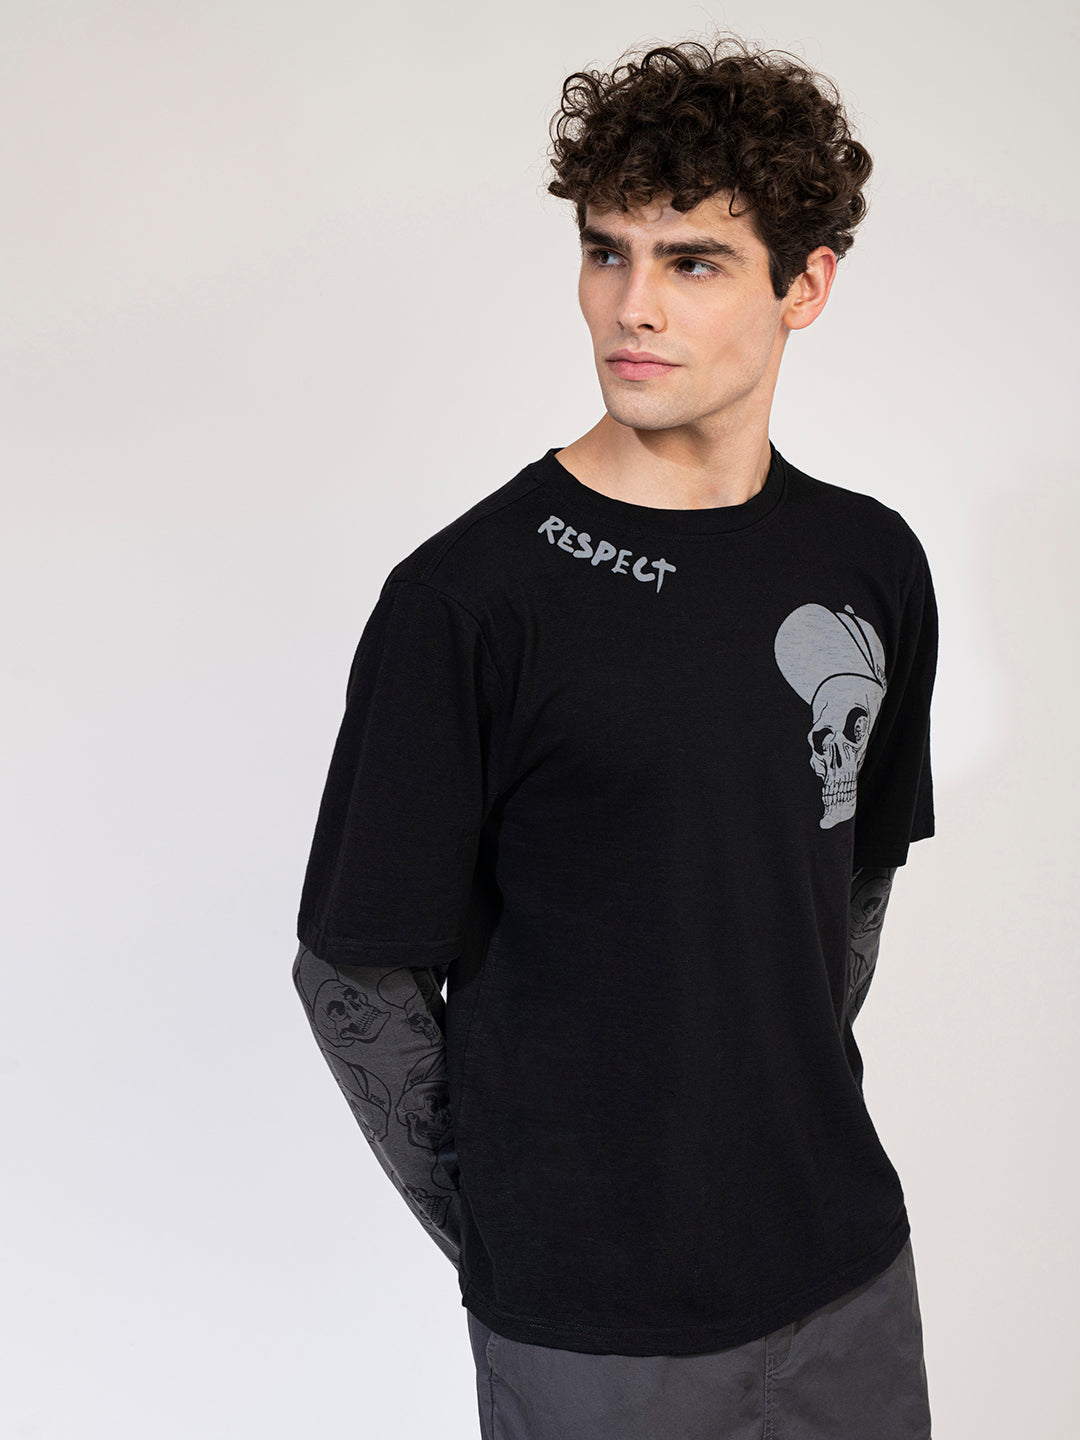 Punk RESPECT Black Oversized Long Sleeve Tshirt